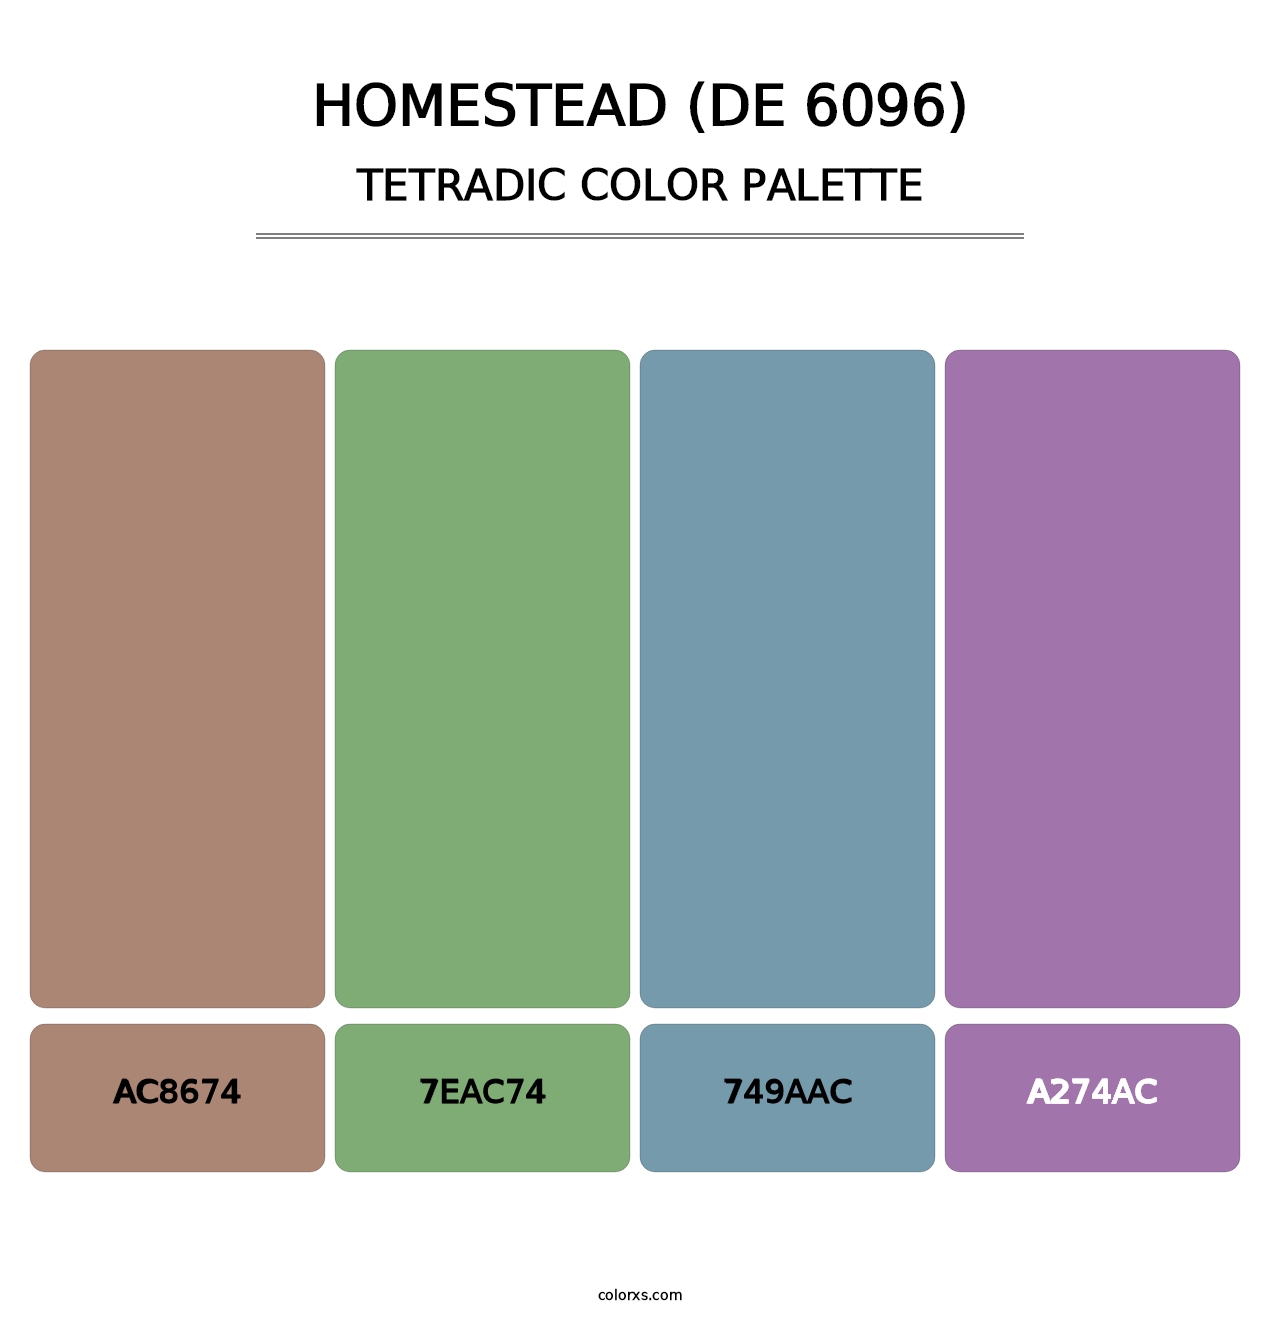 Homestead (DE 6096) - Tetradic Color Palette